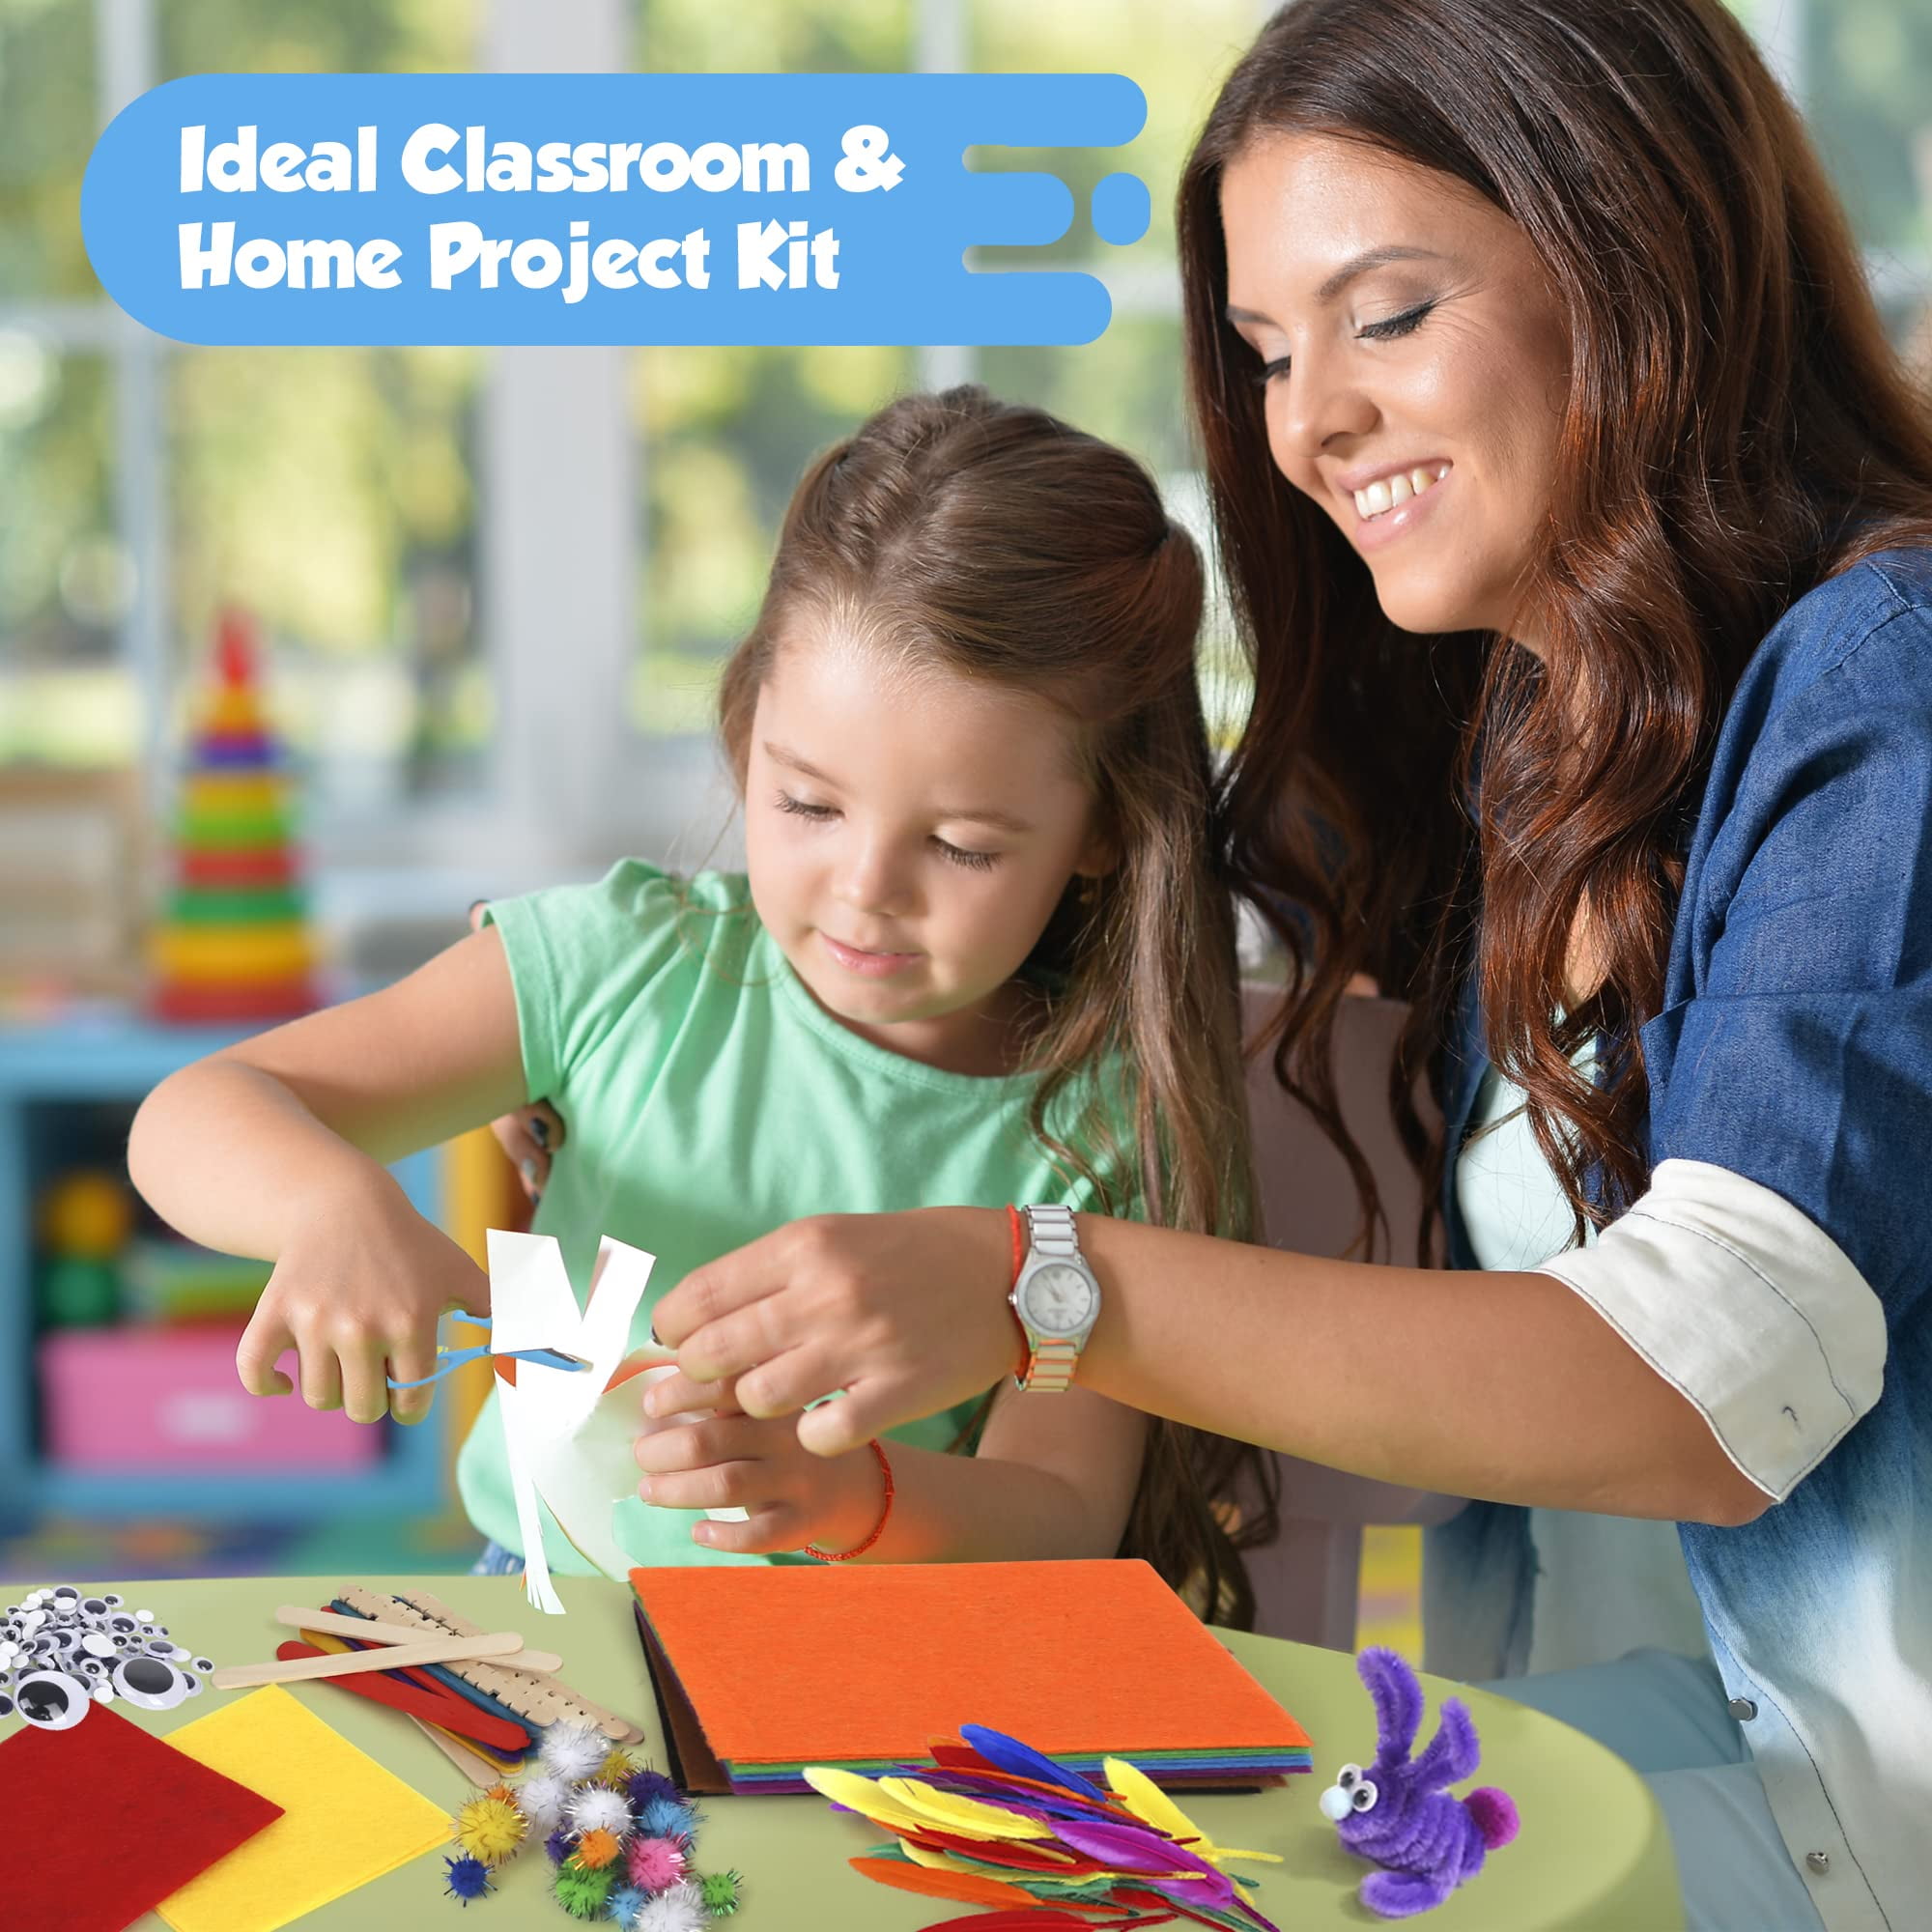 RELAX DREAM 1000 Pcs Mega Kids Art Supplies,Art Craft Kit Supplies Art and  Craft Supplies for Kids for Children Crafts for Children of Arts and Crafts  in Parent Child Activity Classroom 